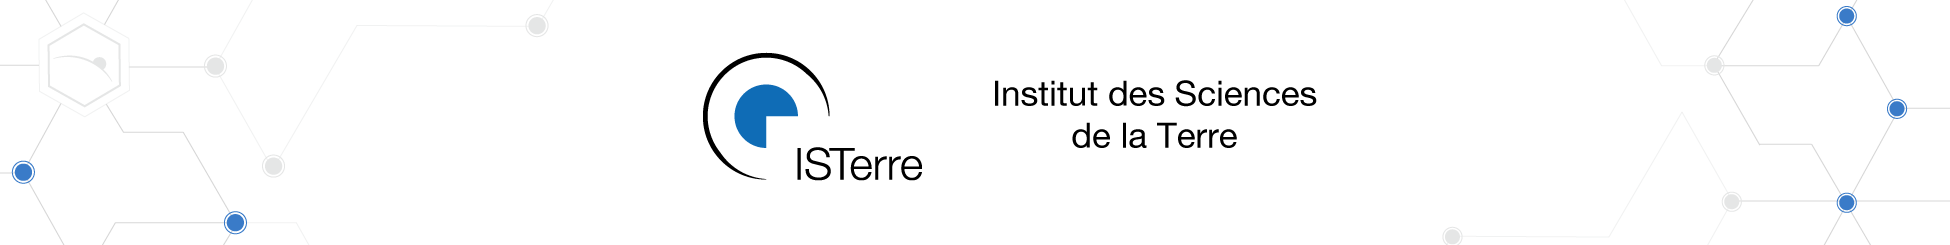 ISTerre - Institut des sciences de la Terre